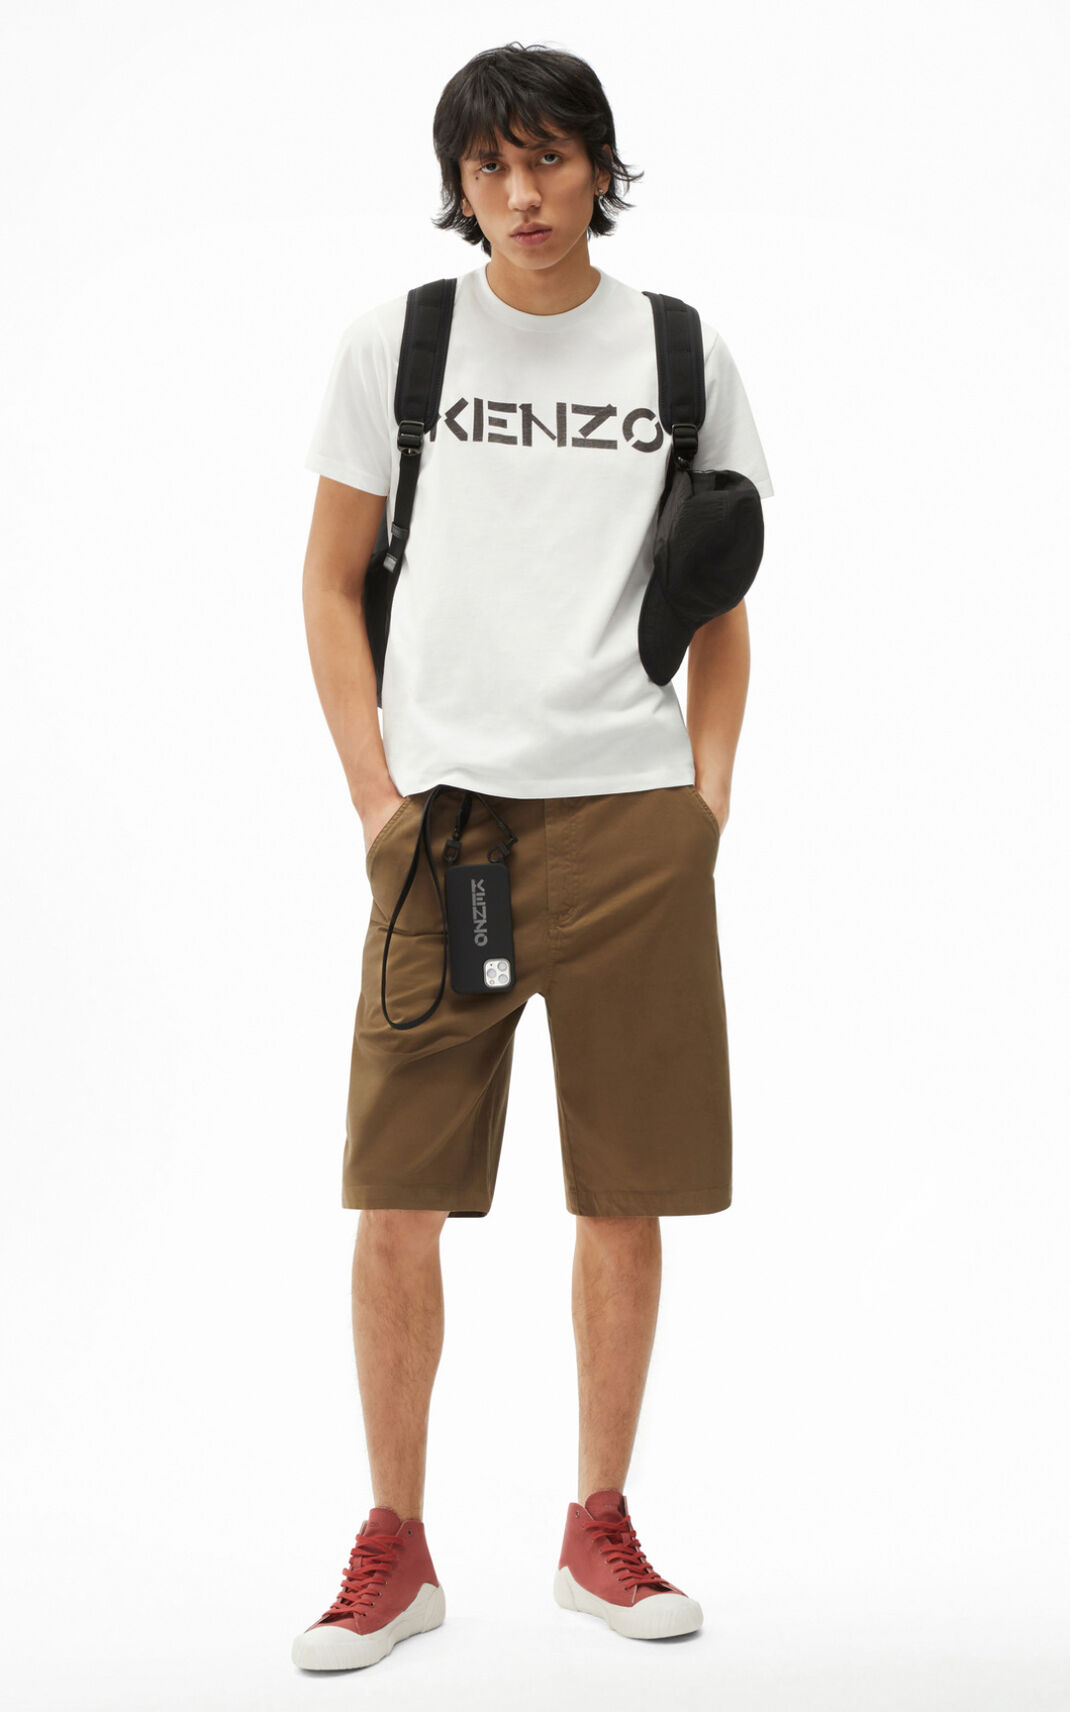 Kenzo Logo Tシャツ メンズ 白 - TXGBMV130